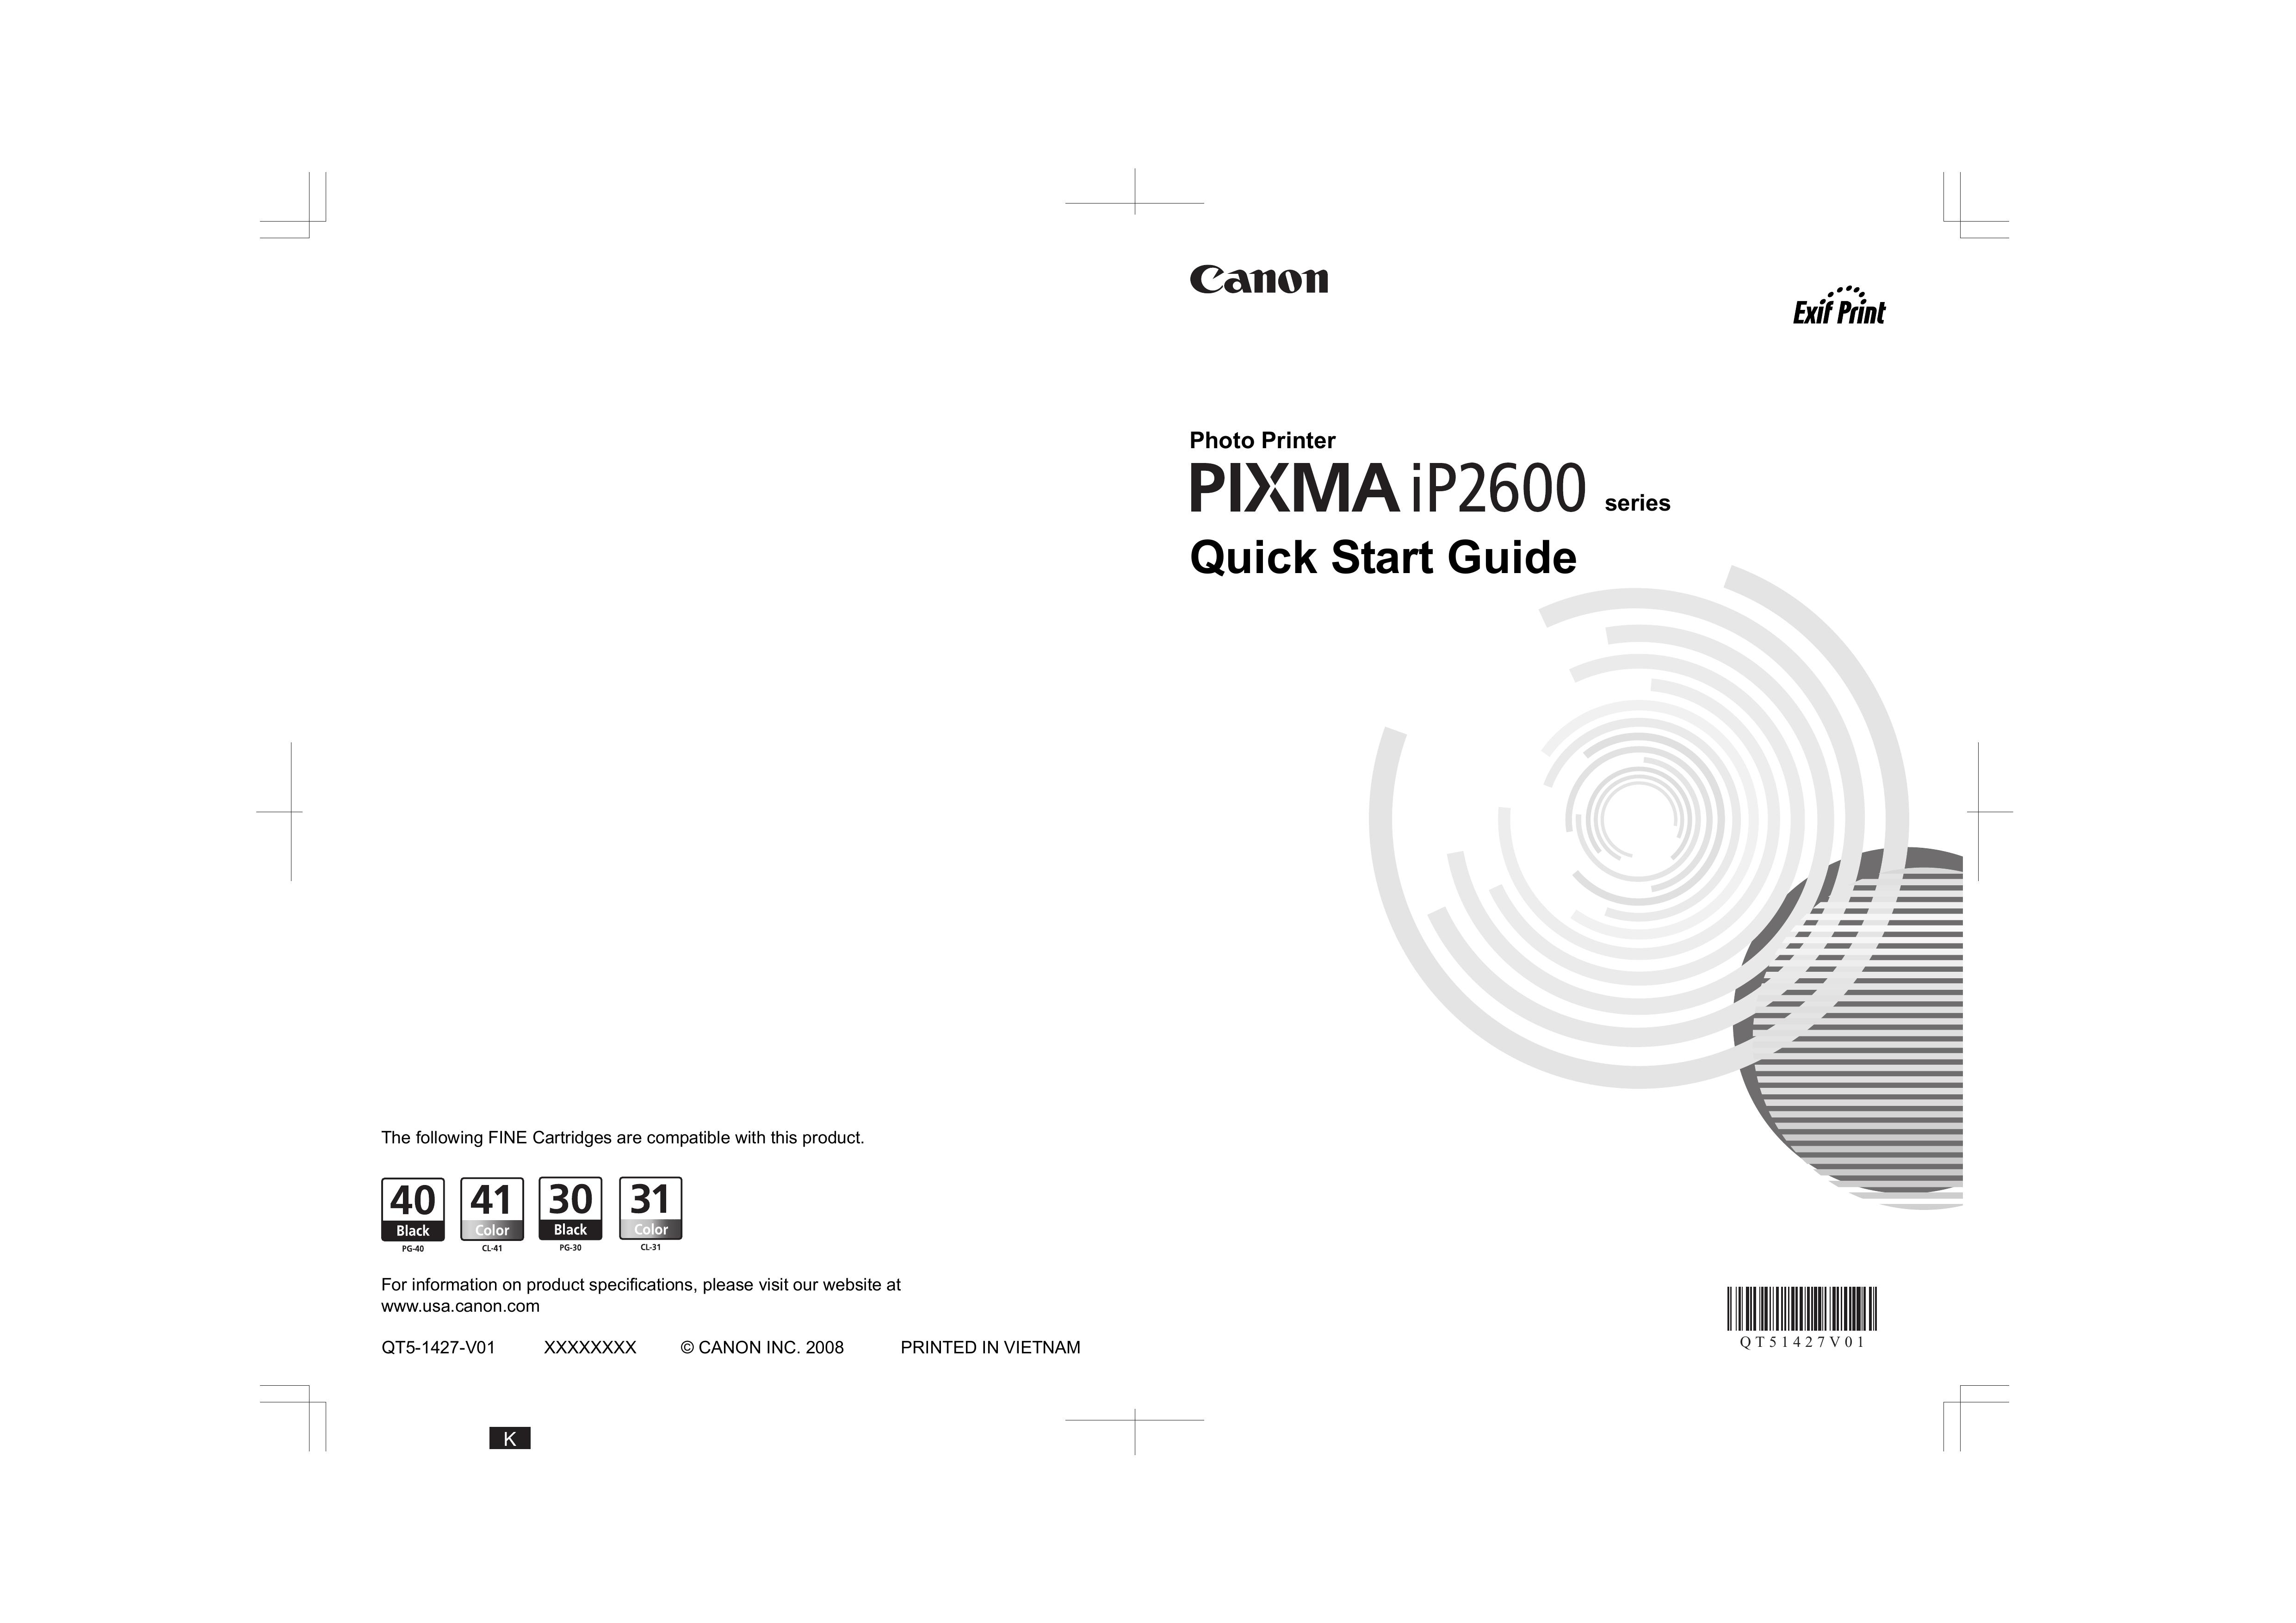 Dell IP2600 Photo Printer User Manual